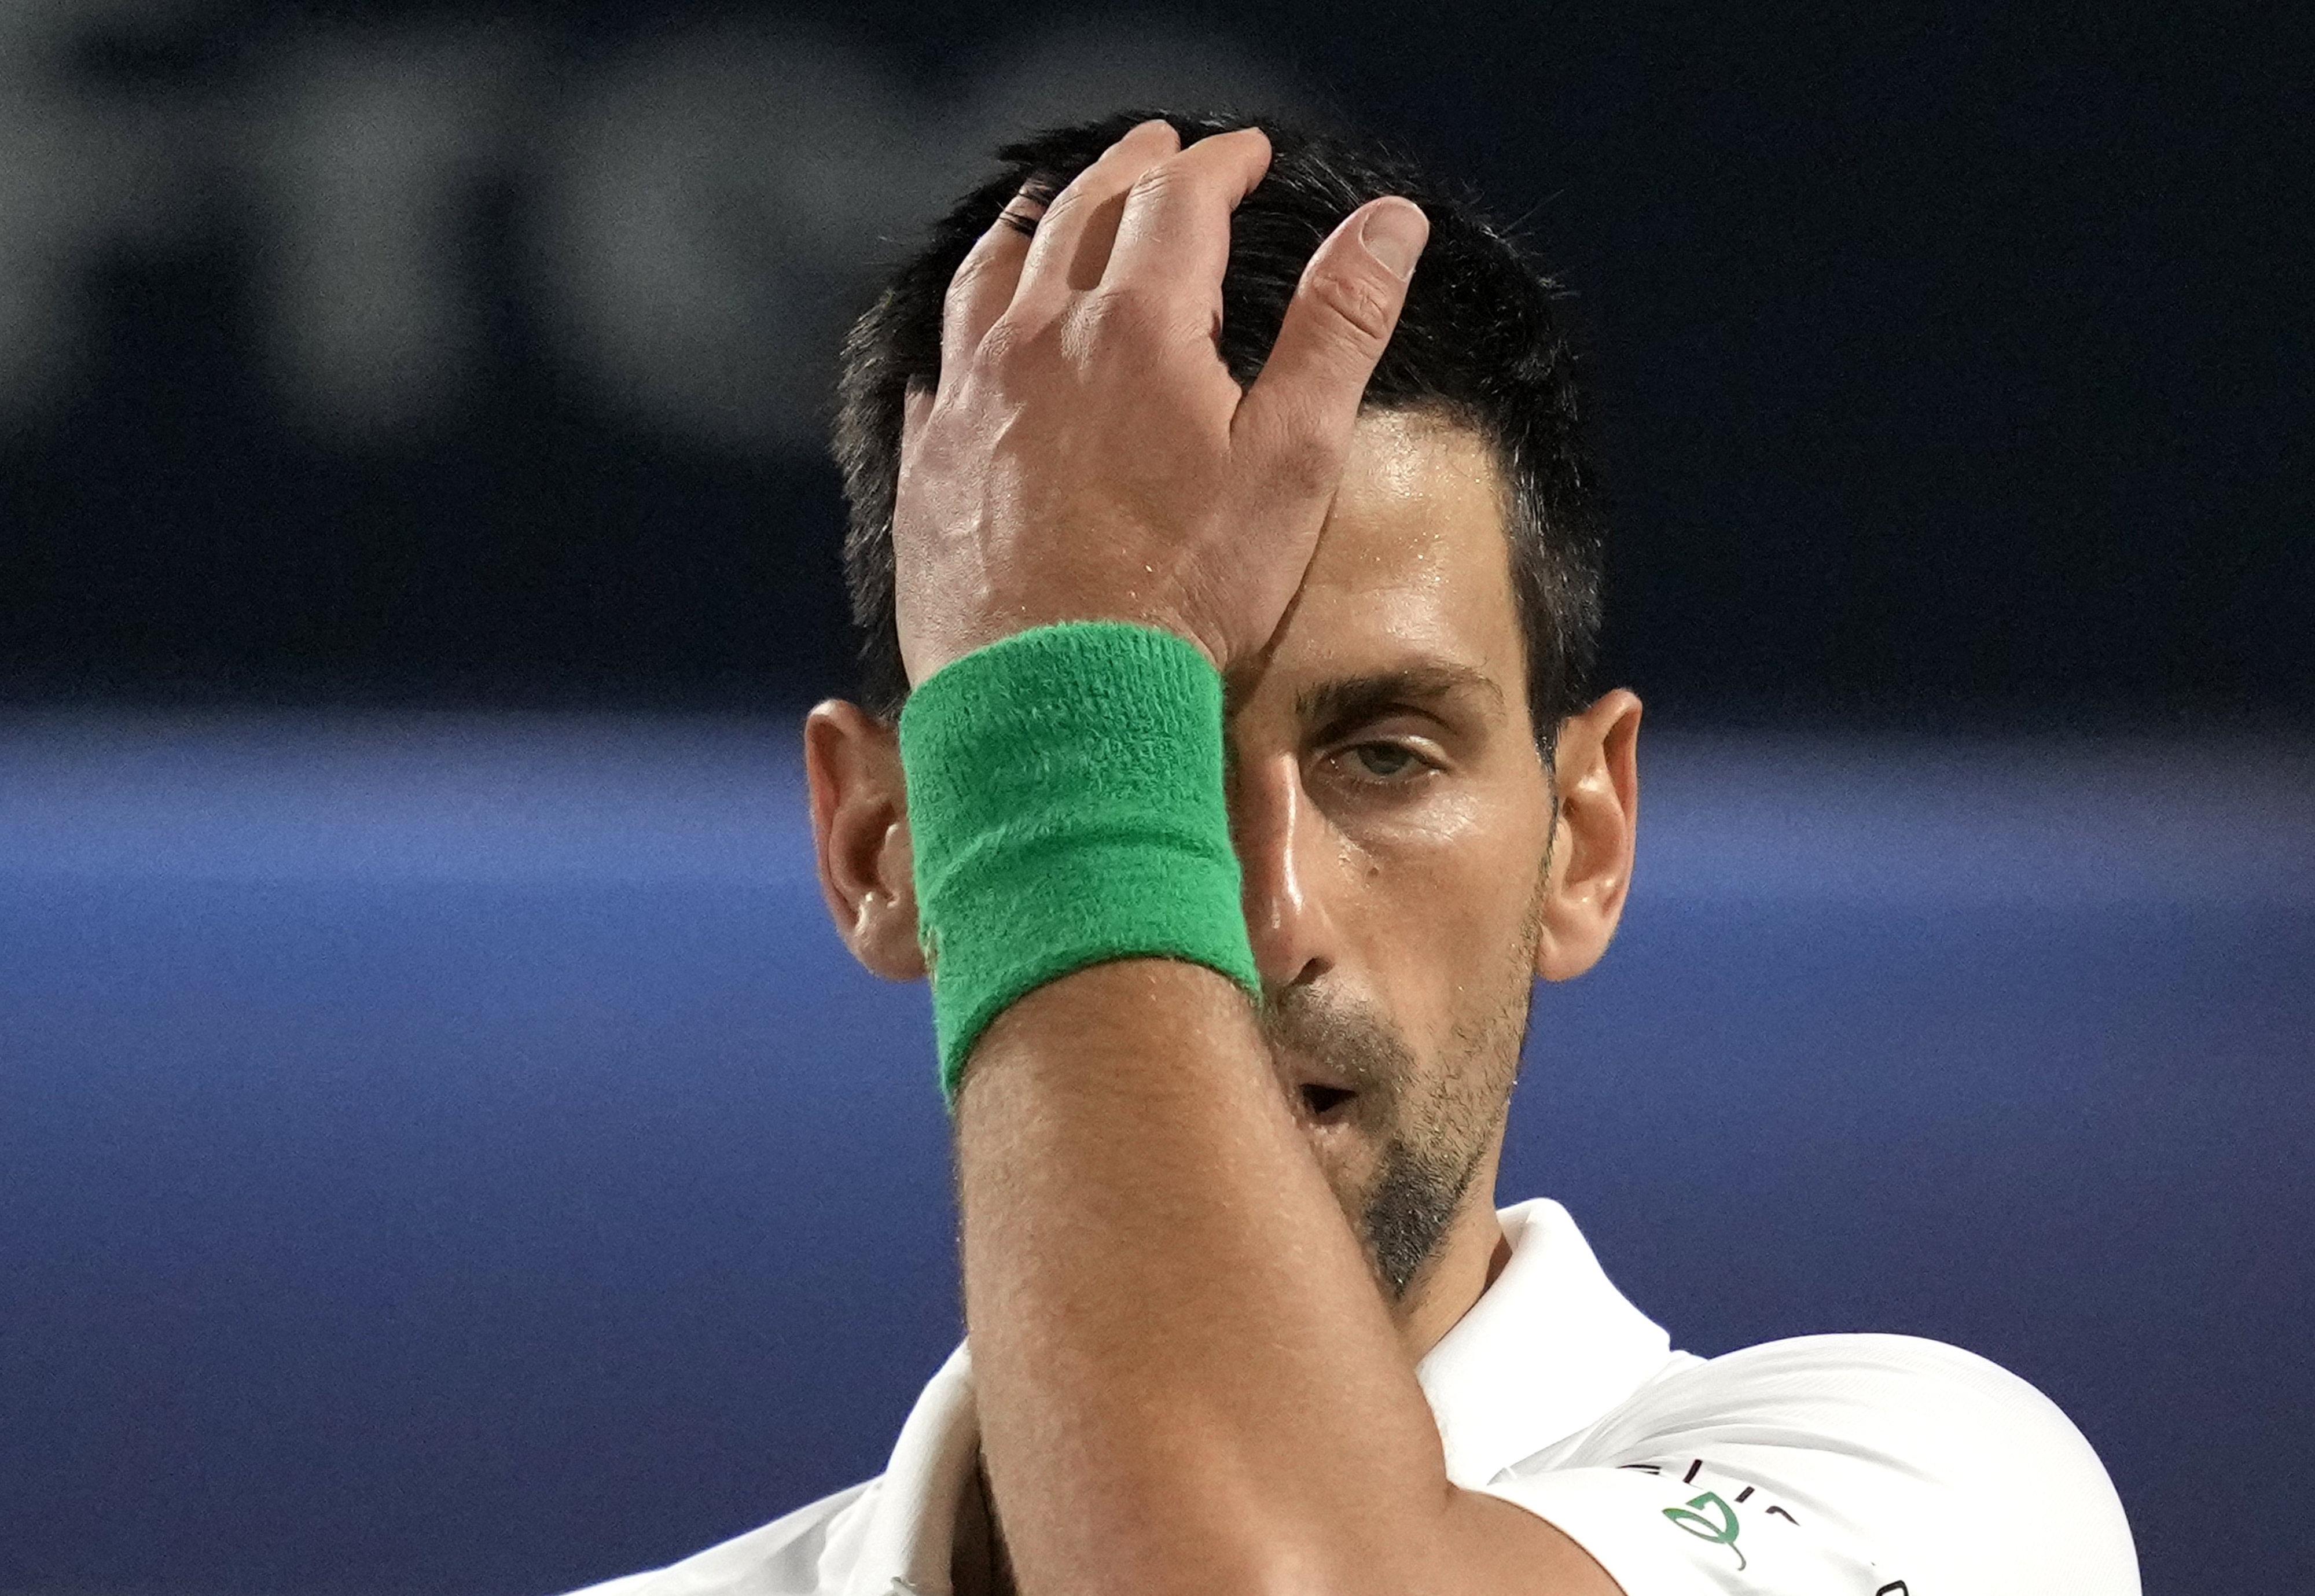 Novak Djokovic wins his first match of 2022 in Dubai